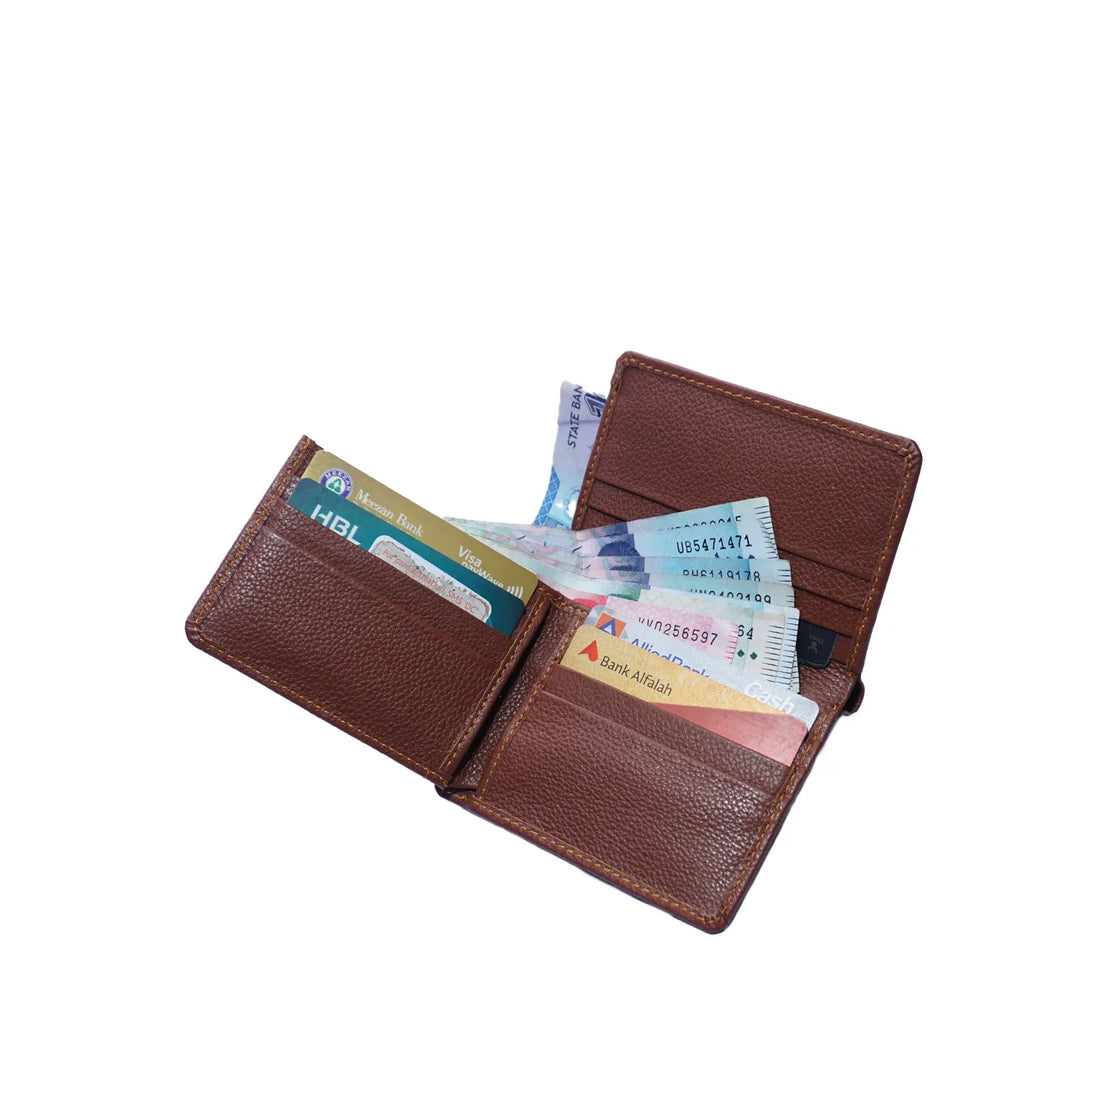 Zephyr Brown Leather Wallet